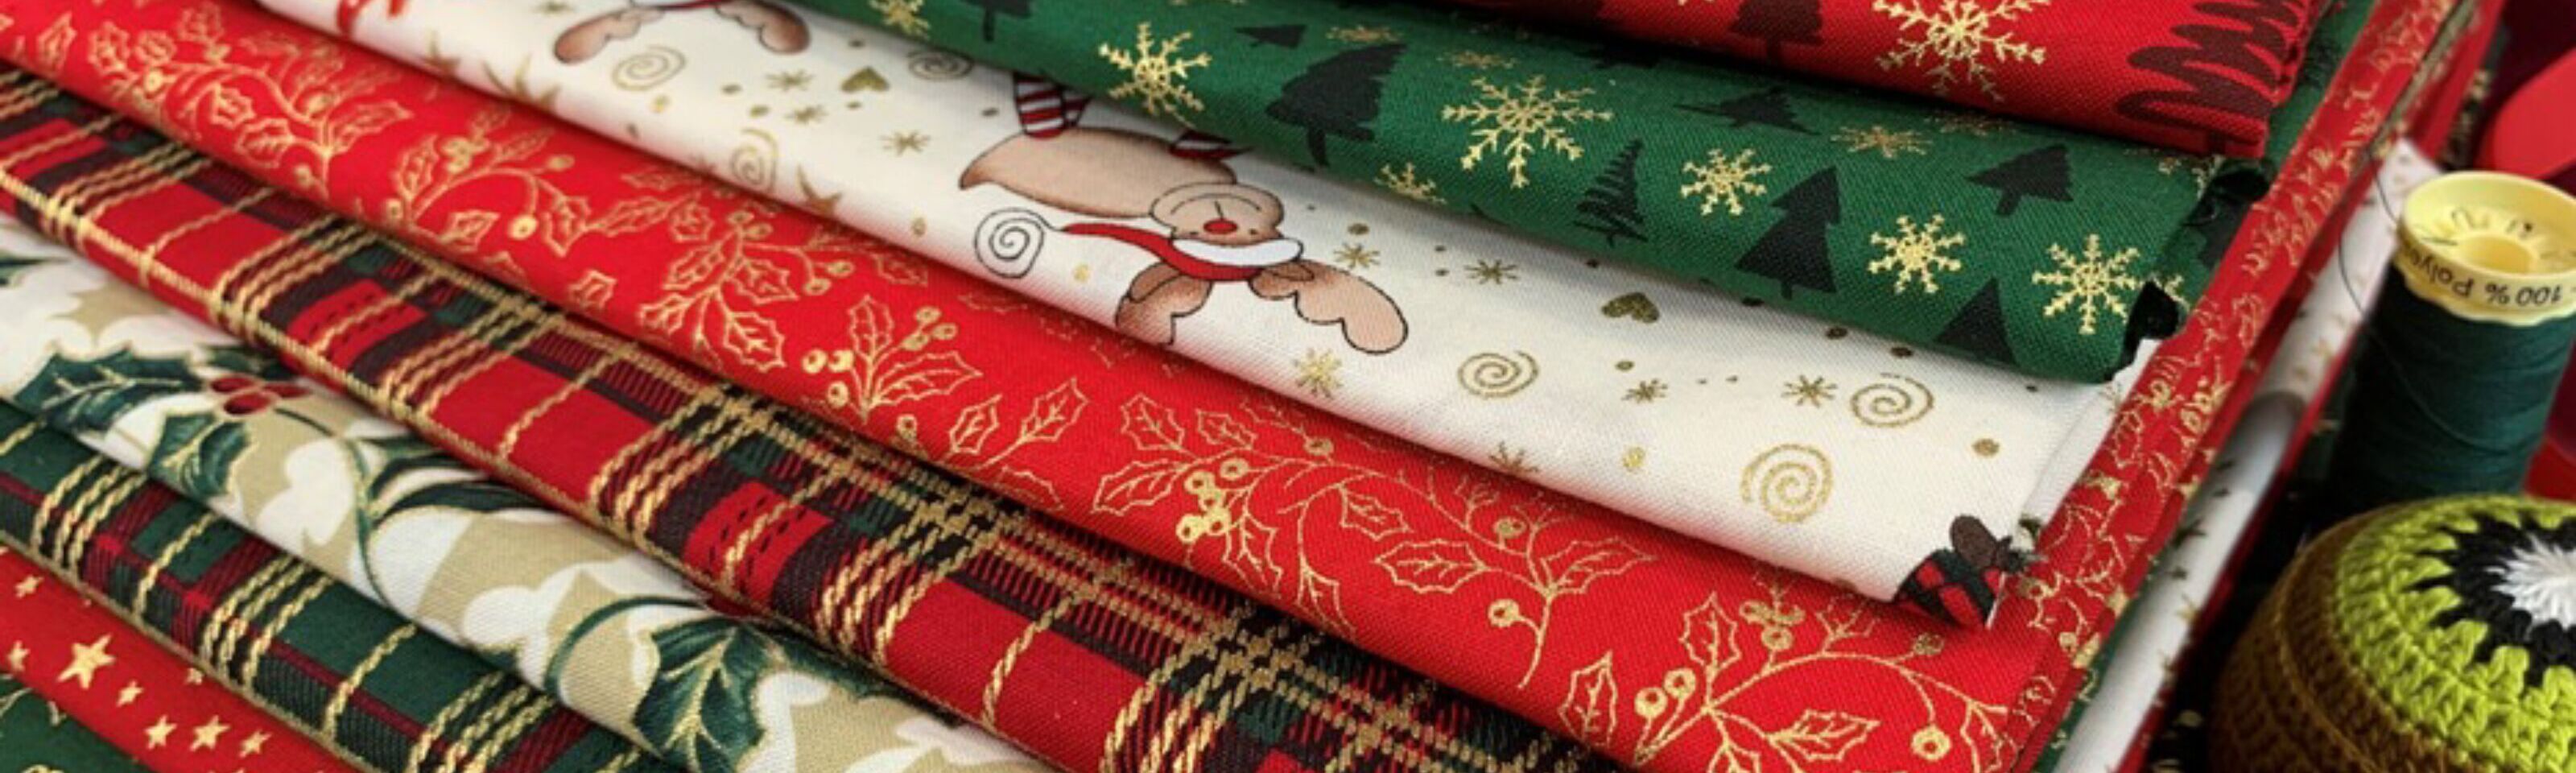 Christmas craft fabrics at Croft Mill UK Online - 2021